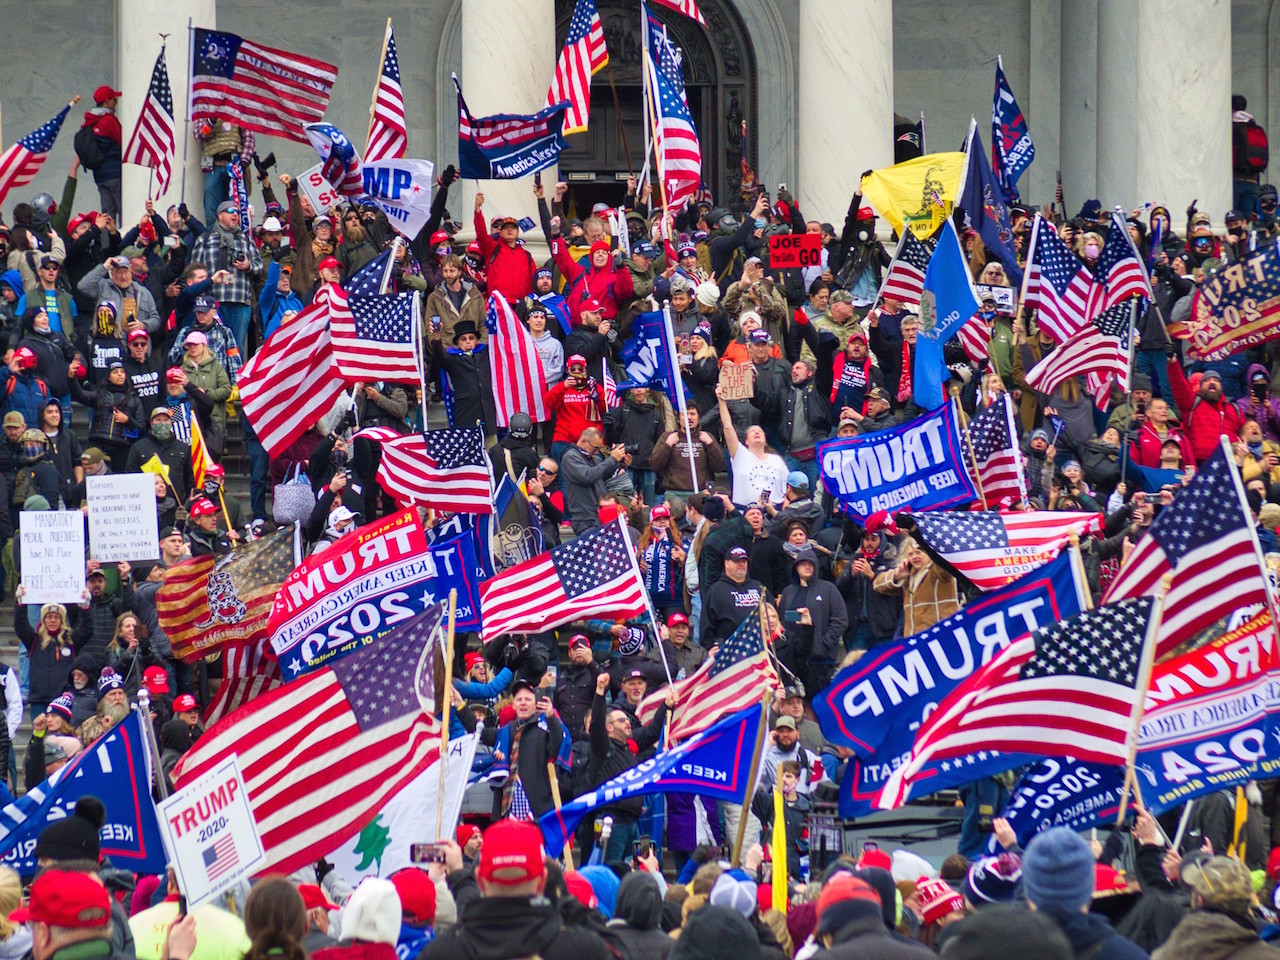 Pro-Trump supporters at the U.S. Capitol. Image credit: Brett Davis/Flickr